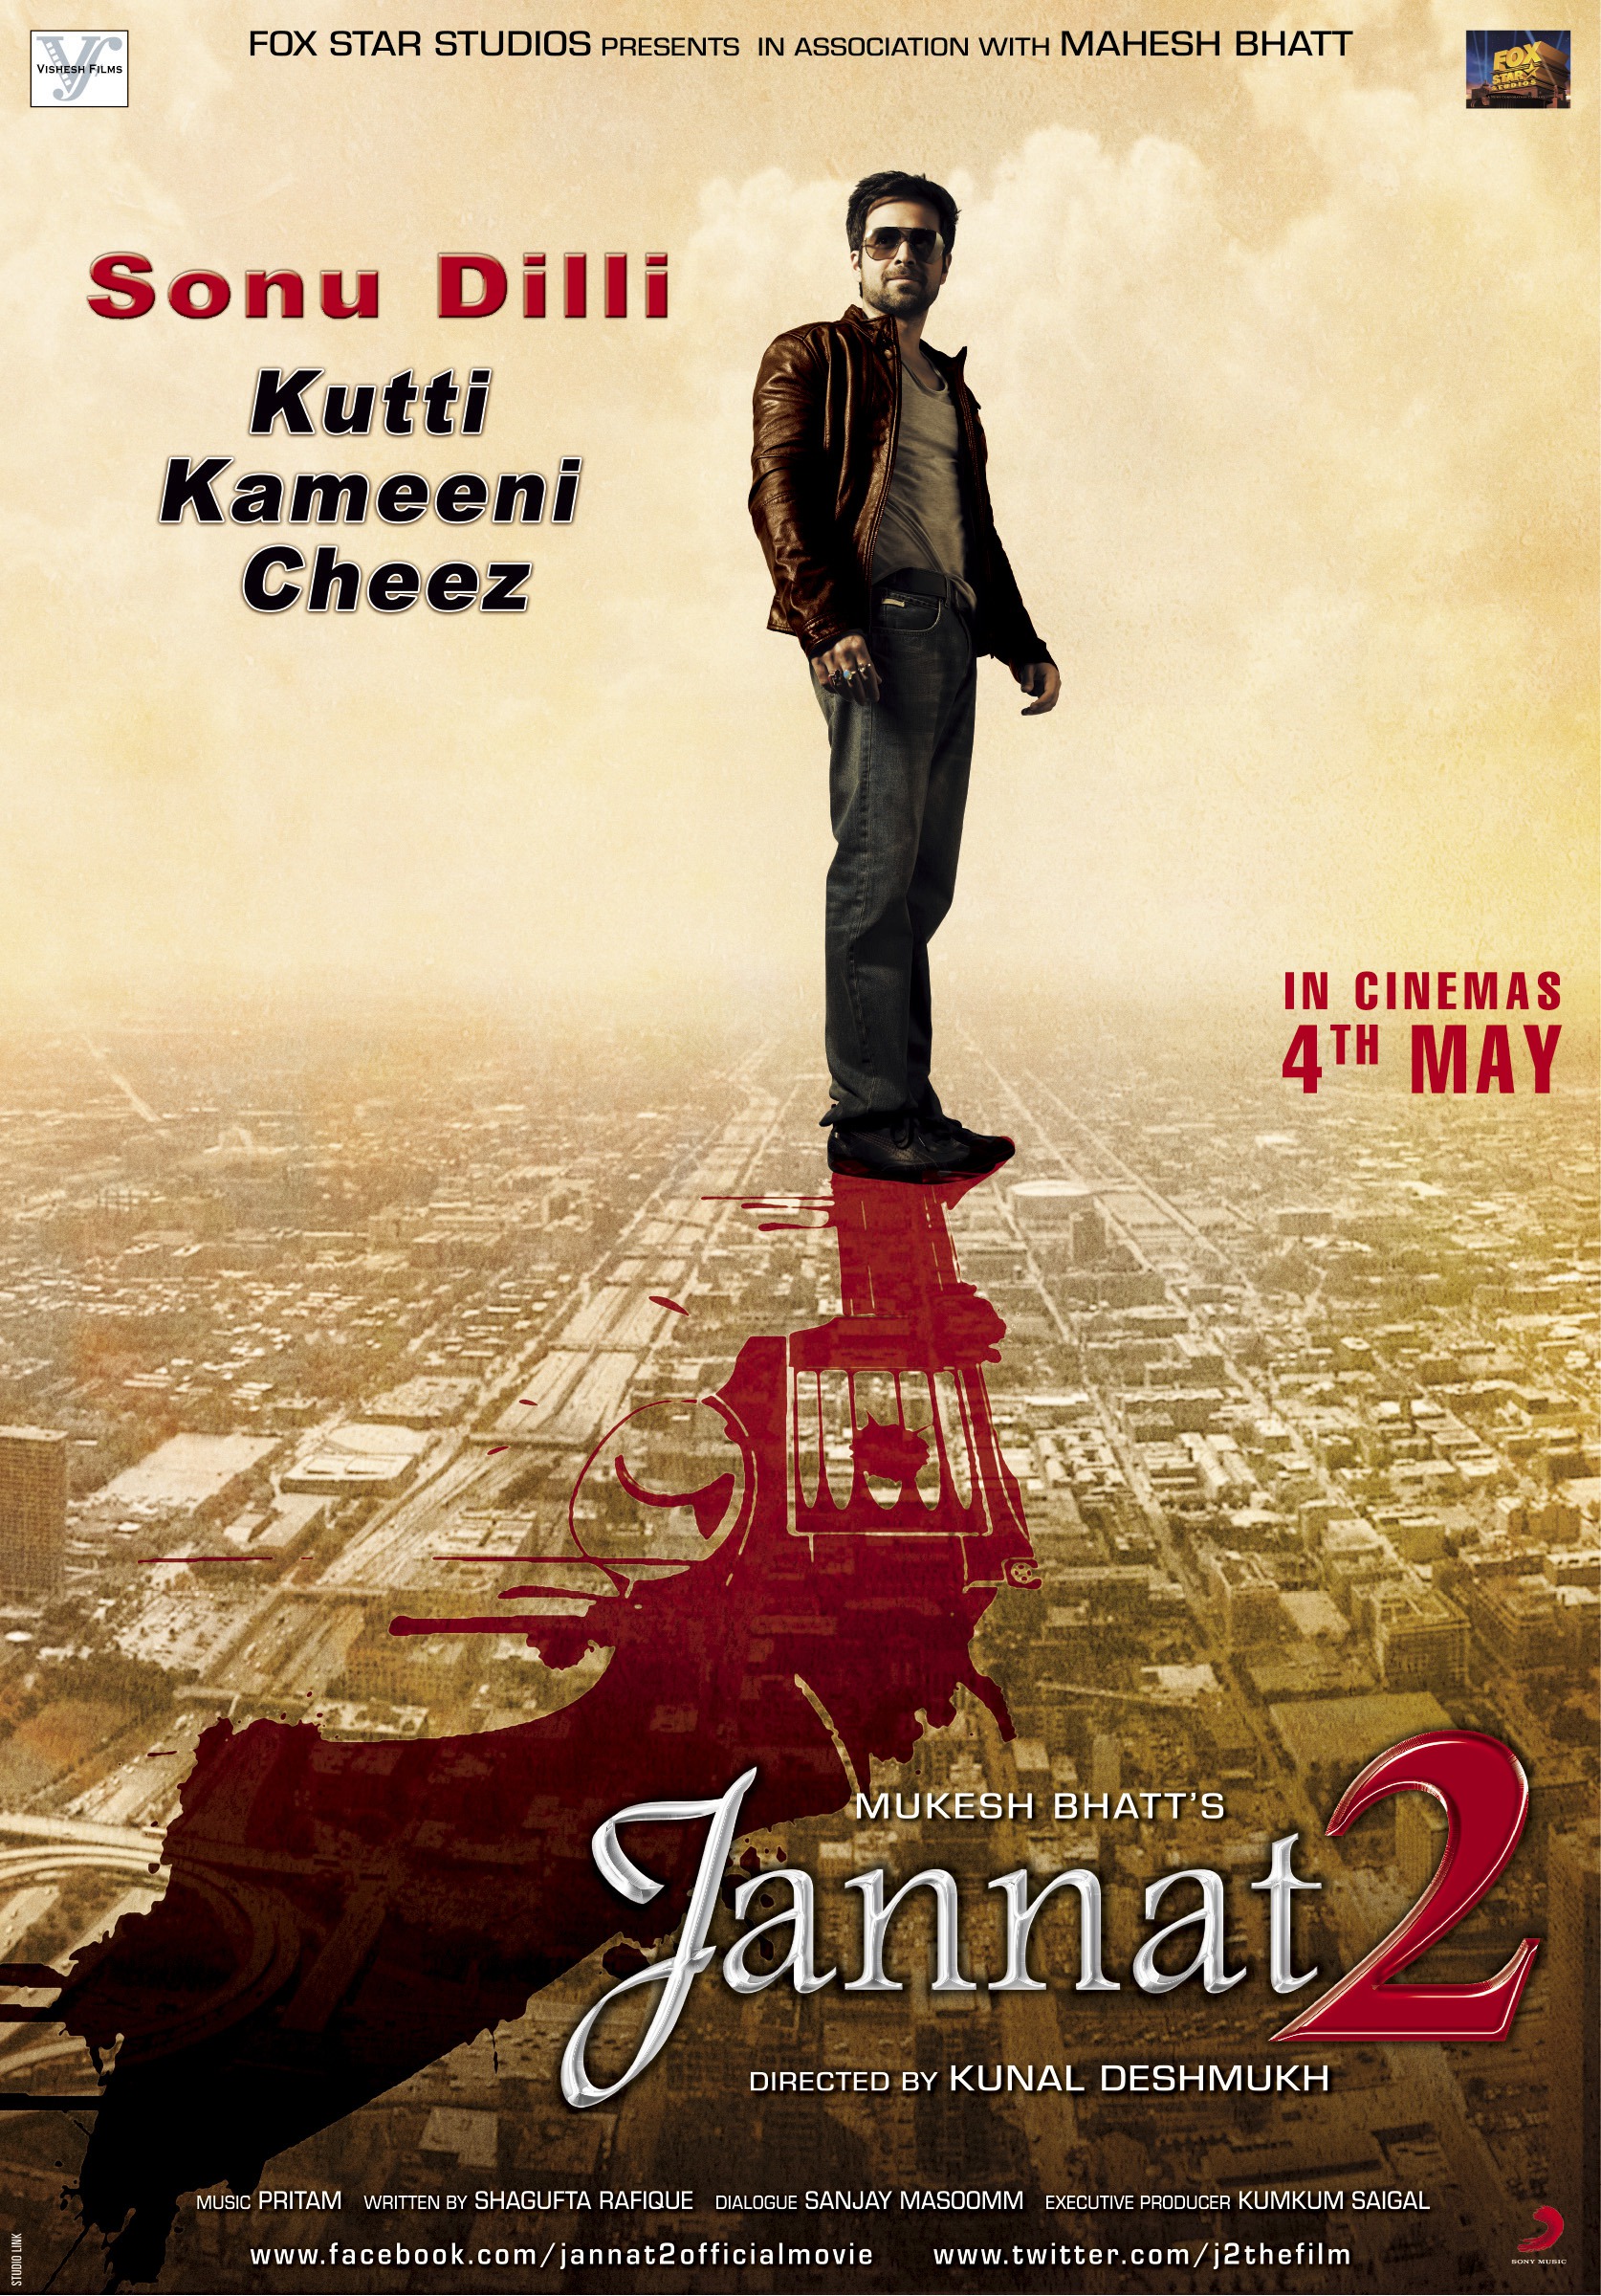 Mega Sized Movie Poster Image for Jannat 2 (#1 of 2)